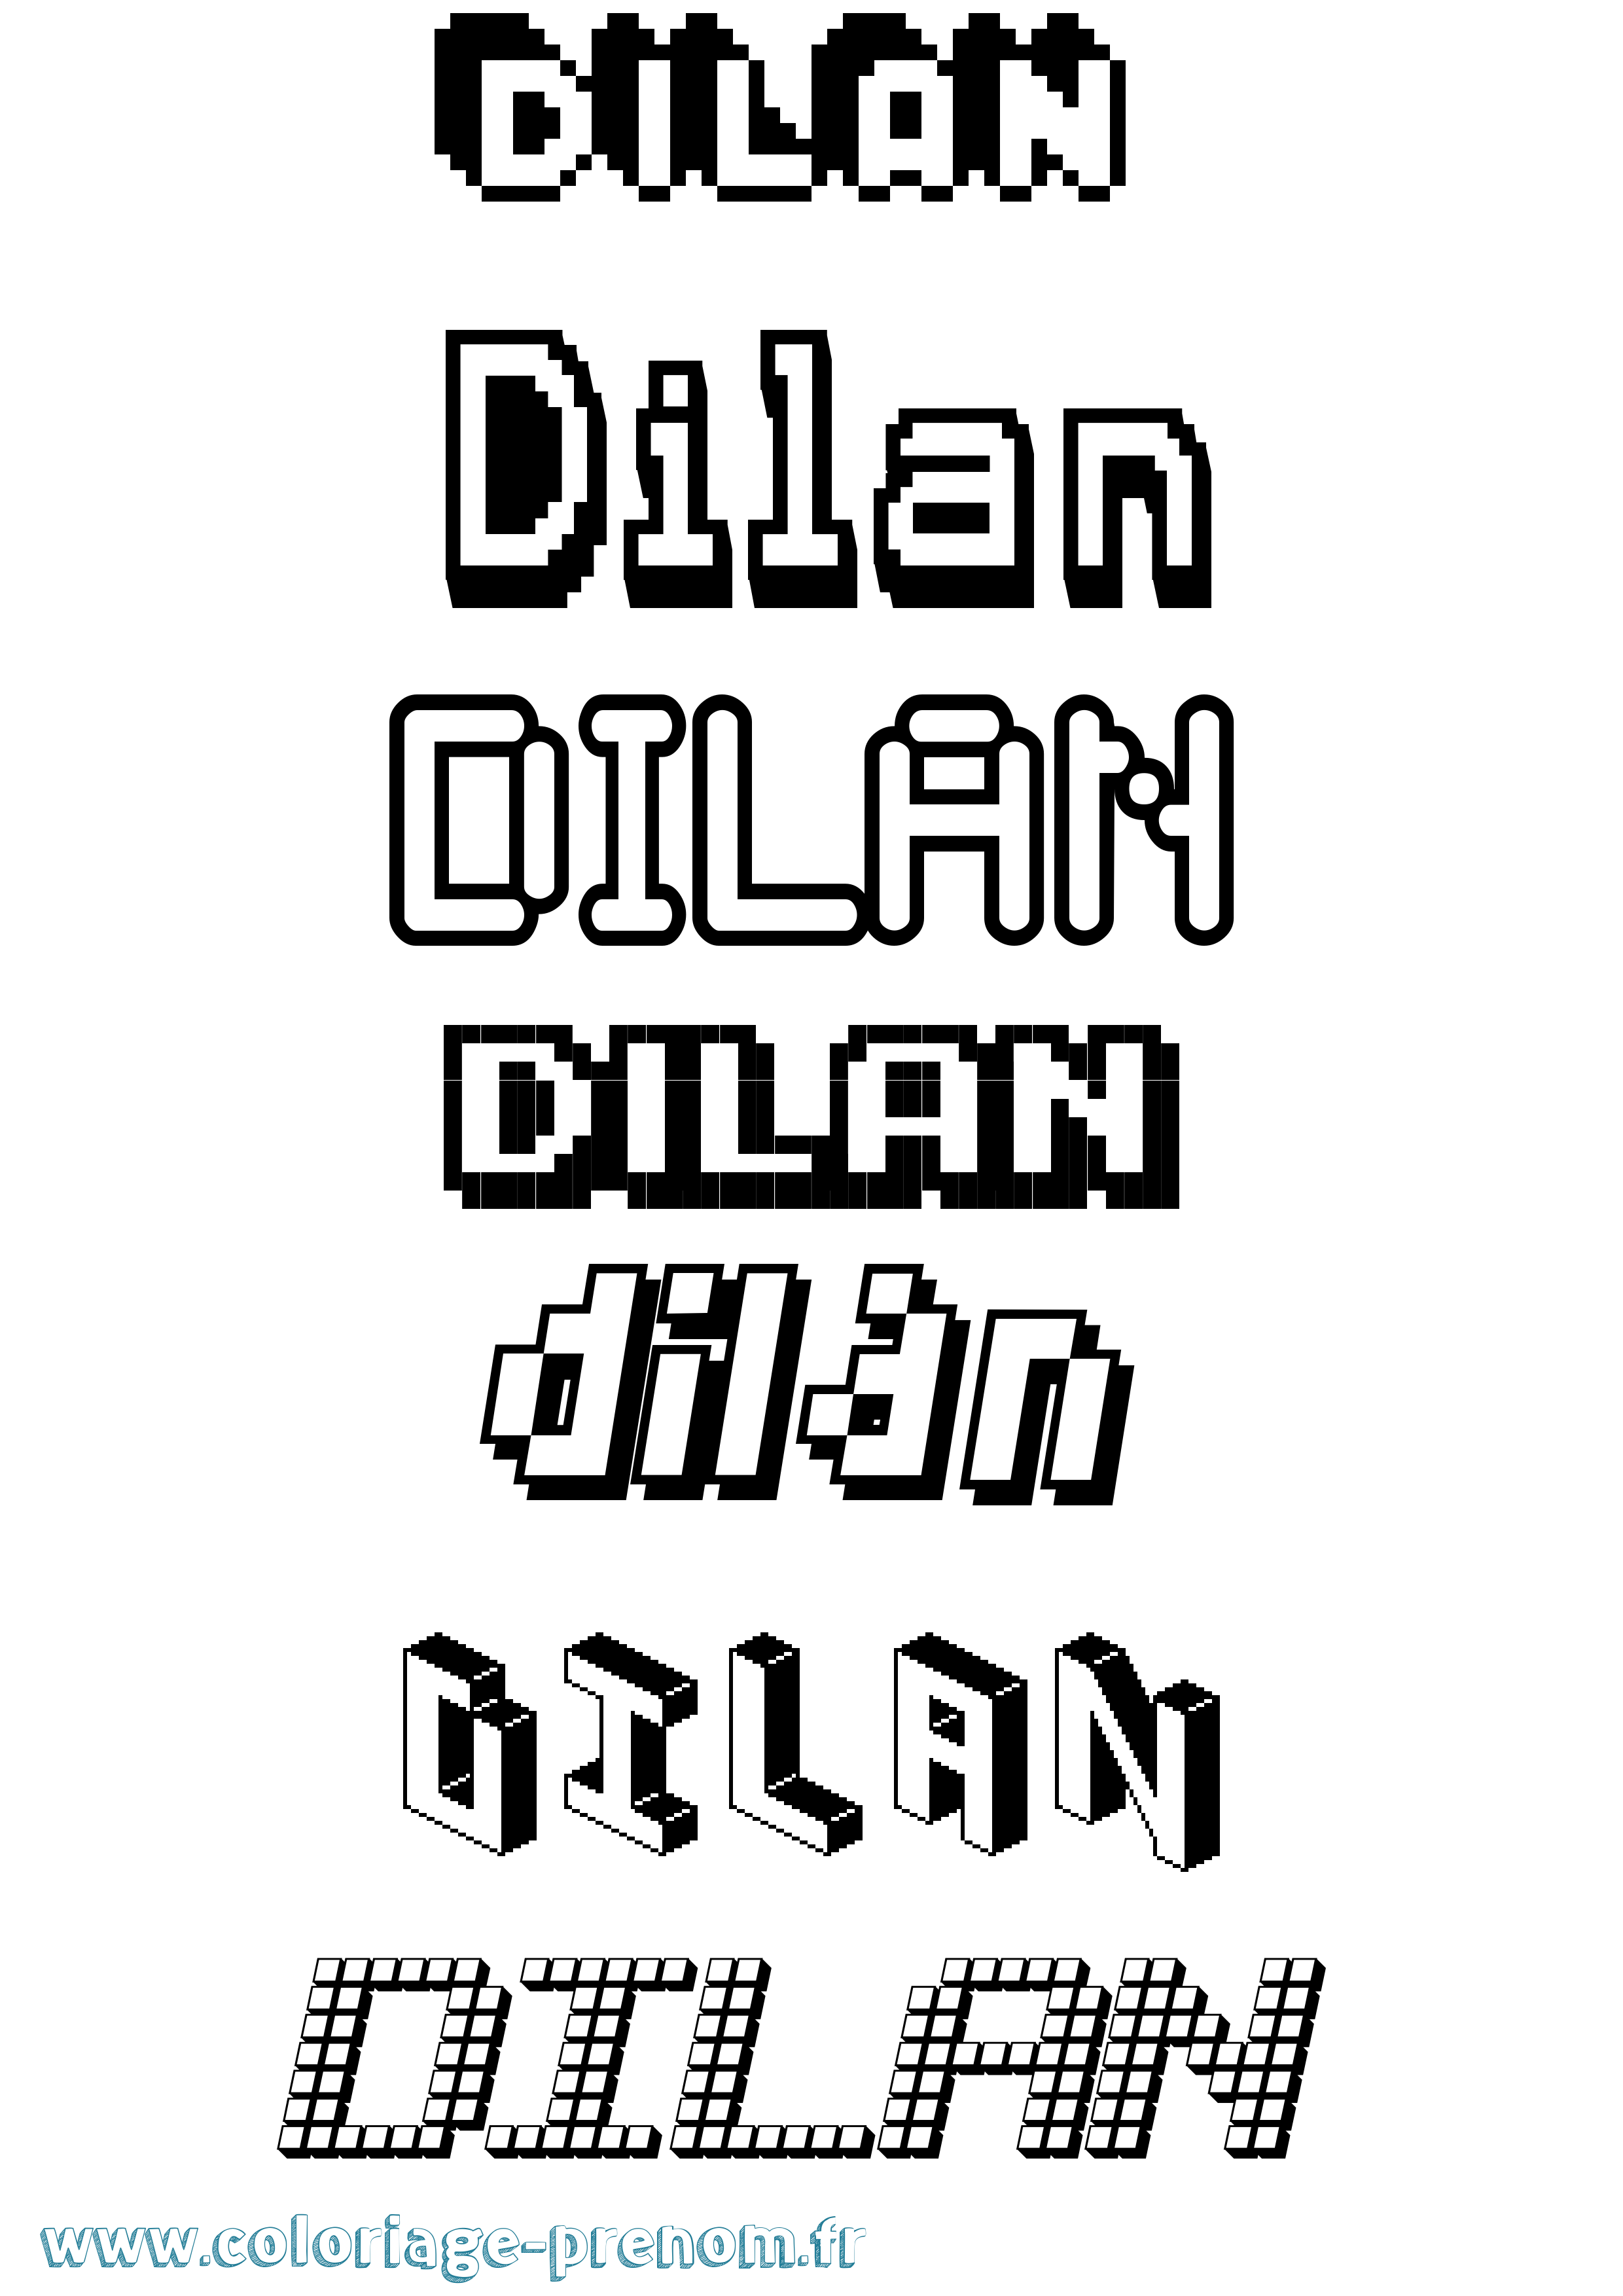 Coloriage prénom Dilan Pixel